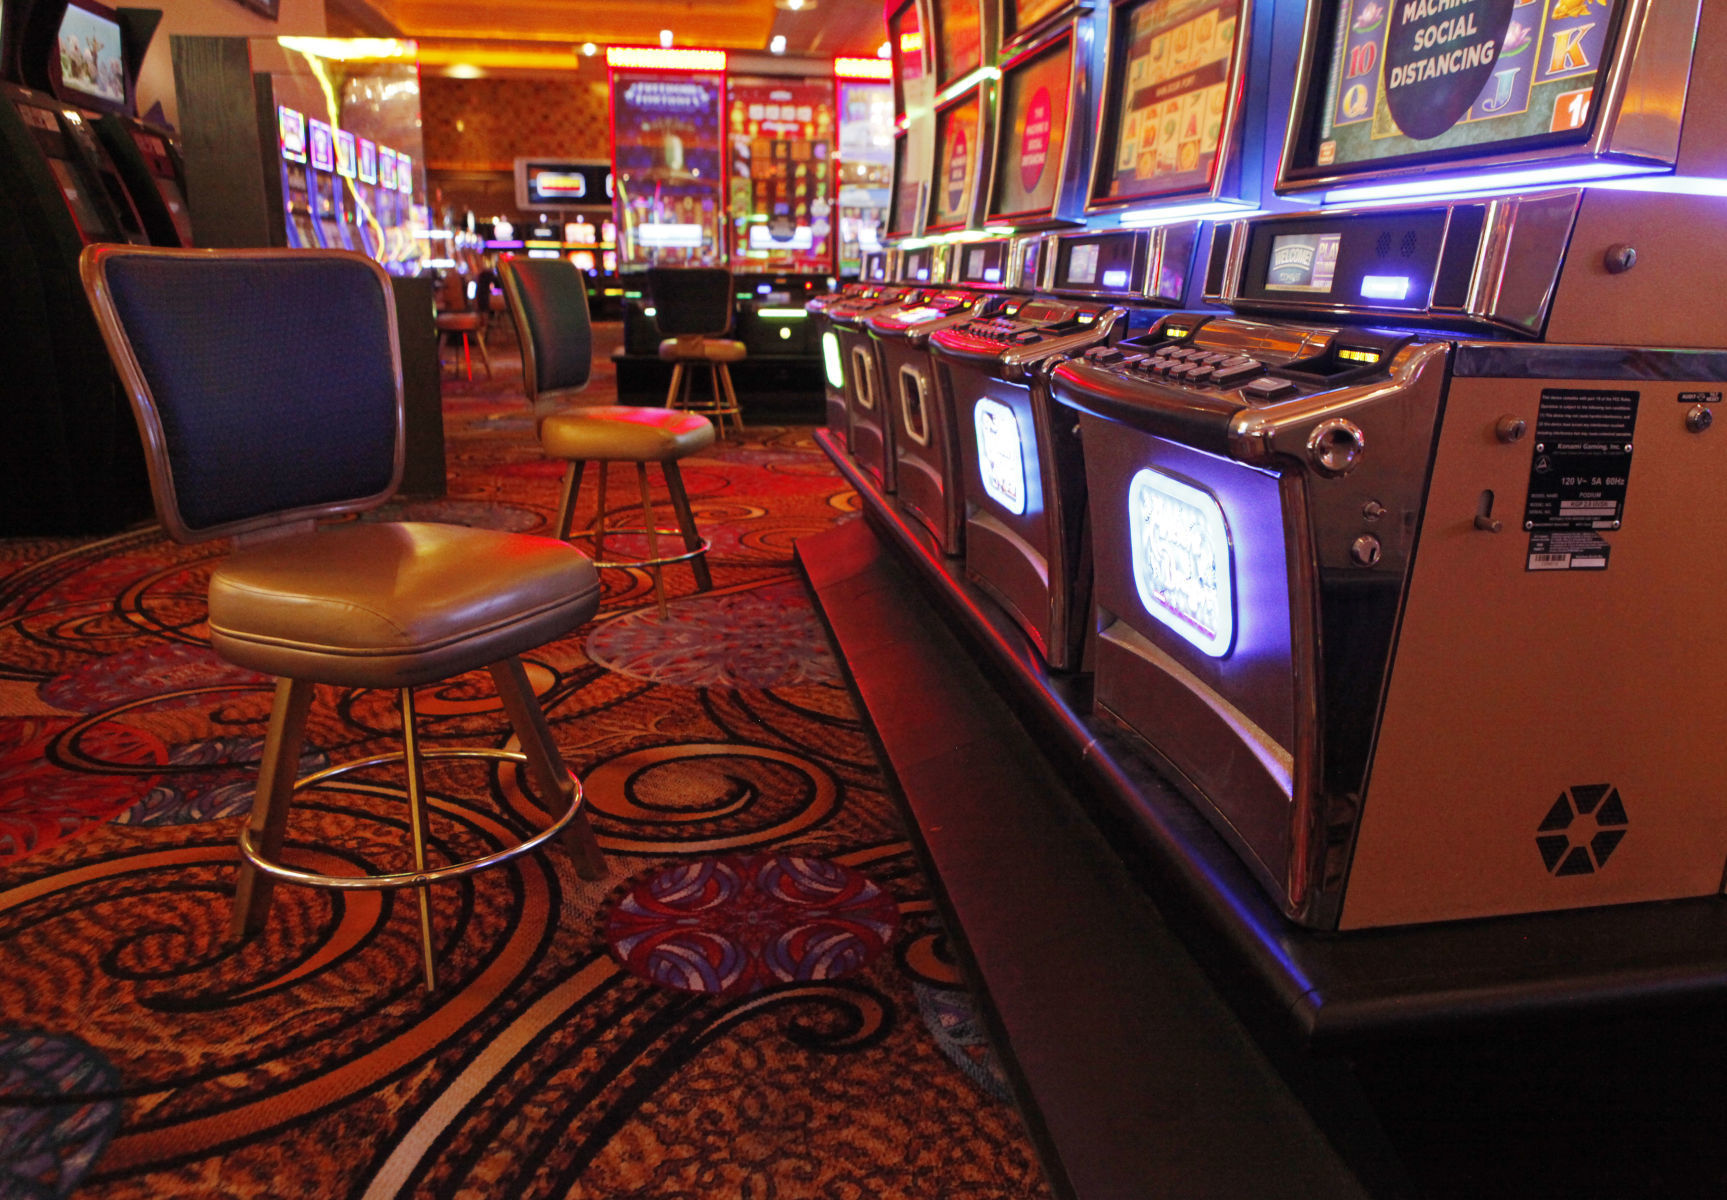 blue chip casino entertainment rocks lounge